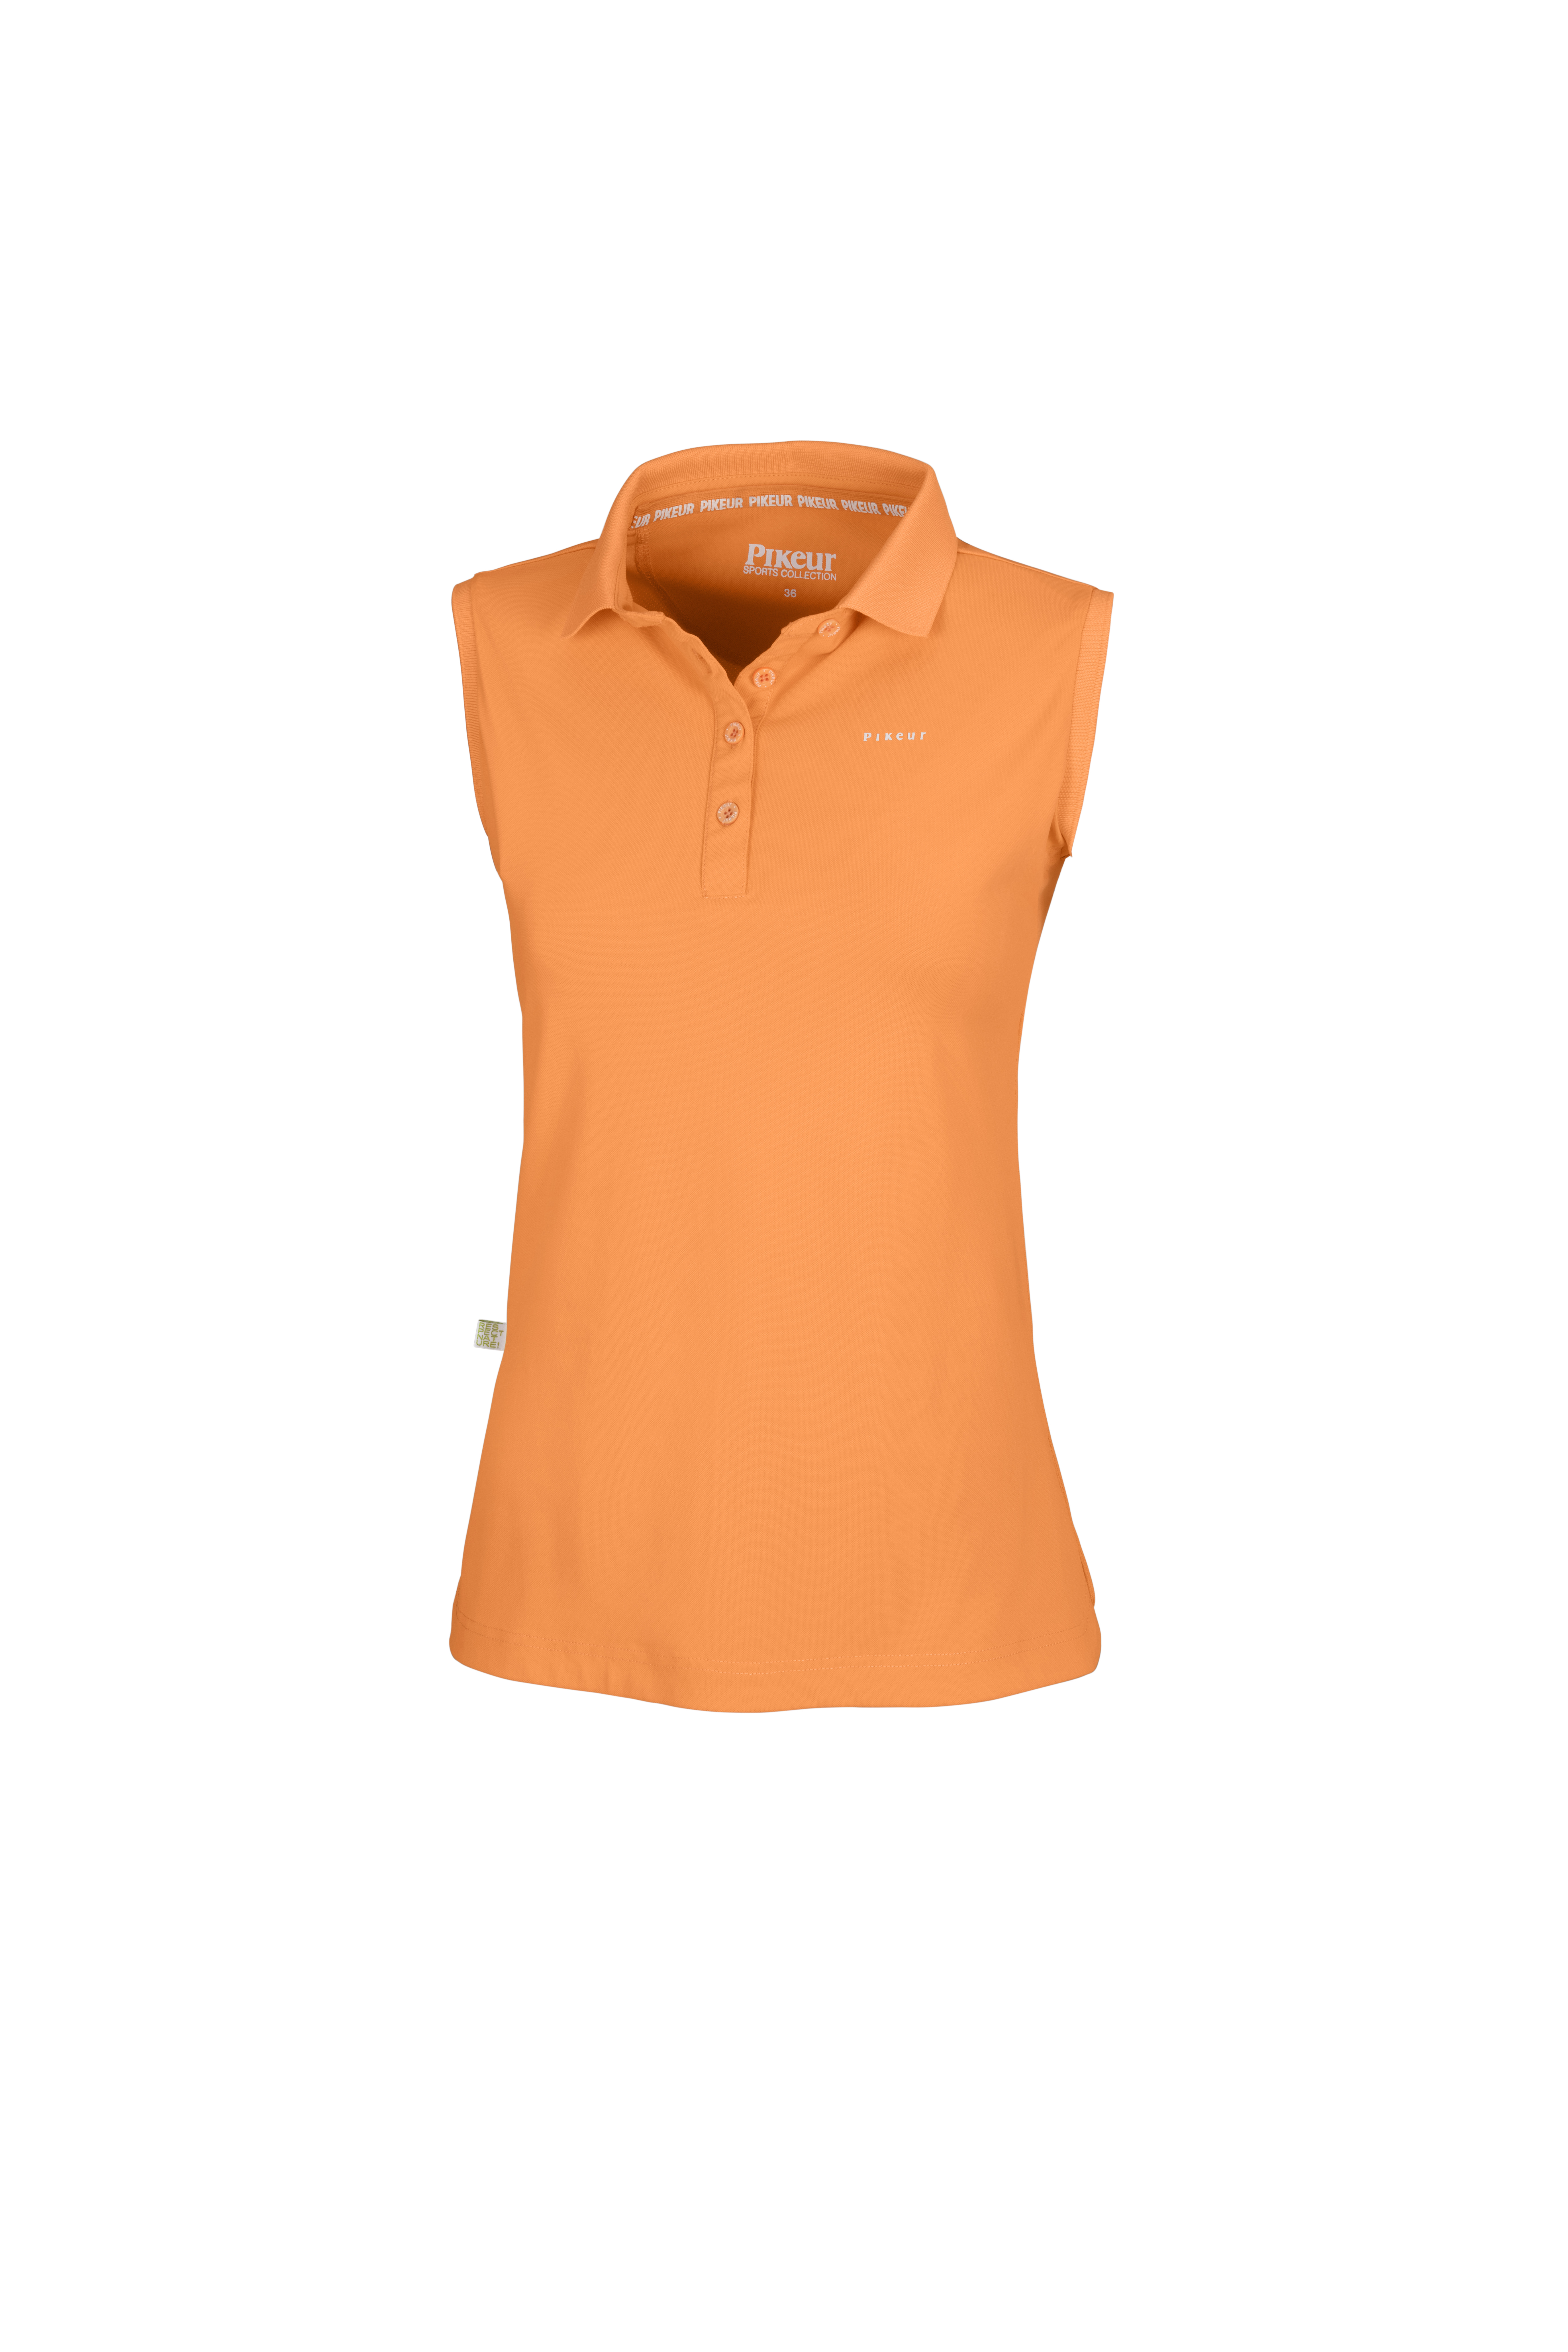 Funktions-Poloshirt JARLA, ärmellos, Damen, Sportswear 22, mandarin orange